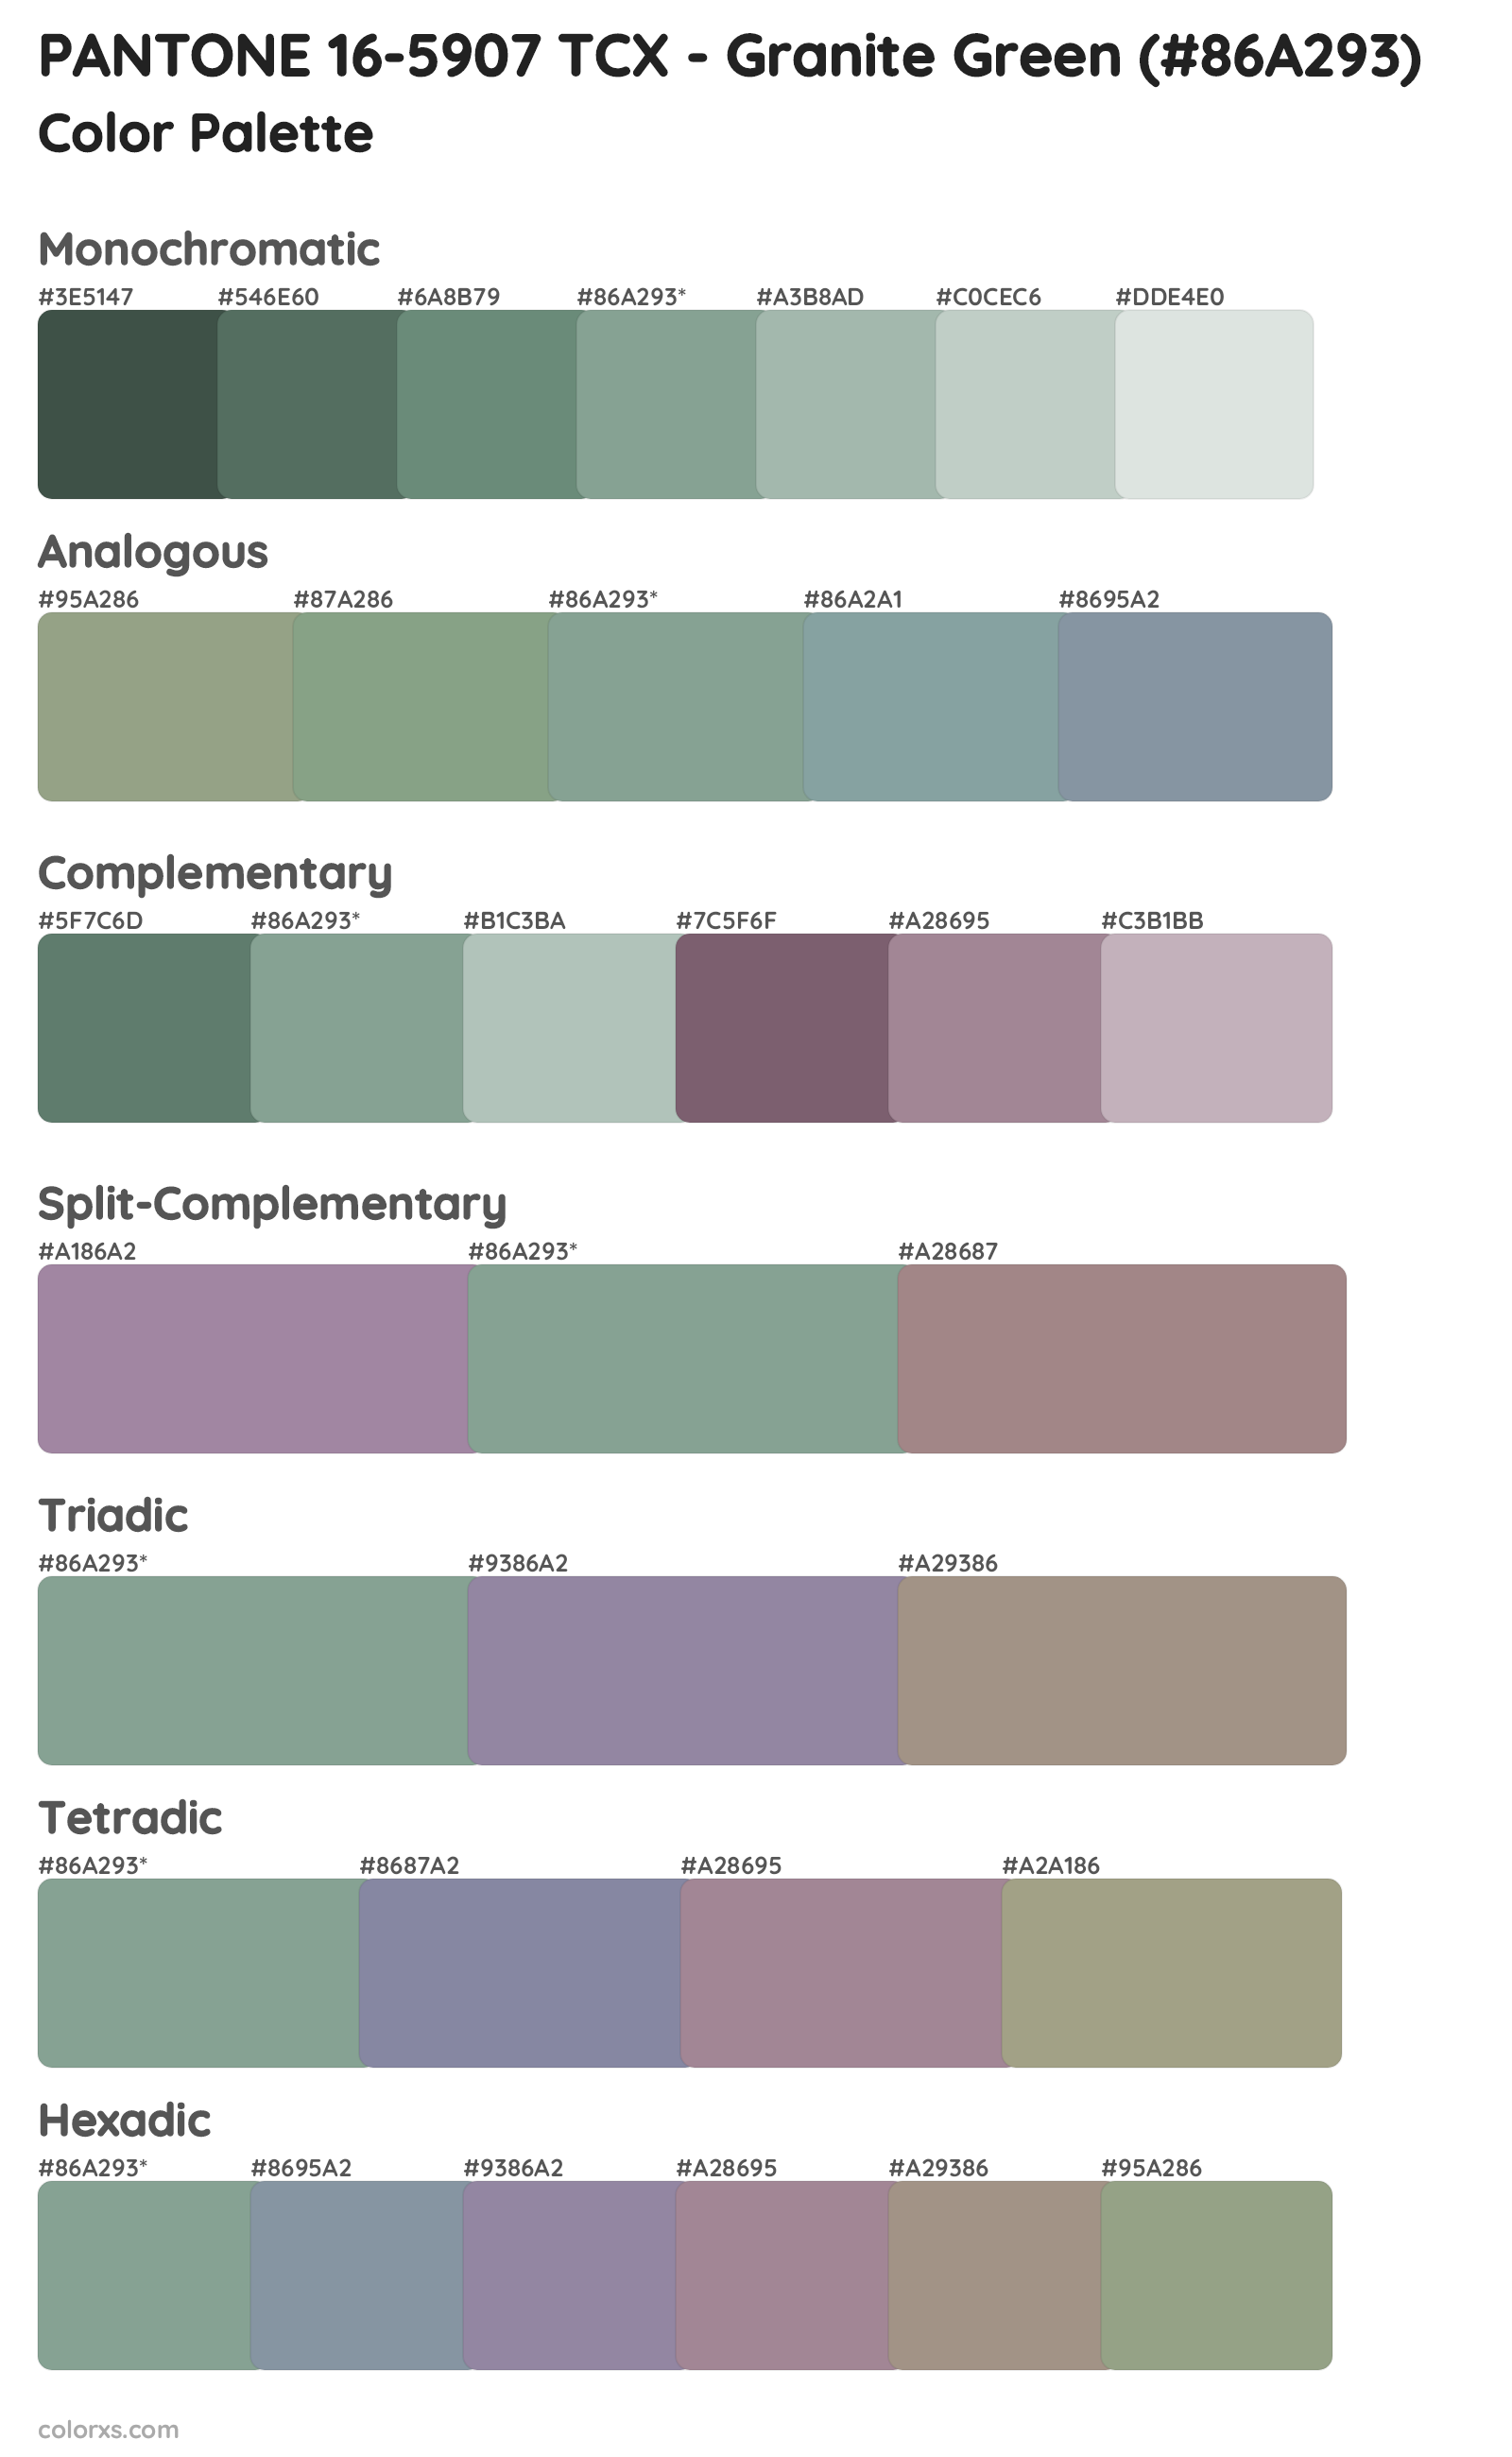 PANTONE 16-5907 TCX - Granite Green Color Scheme Palettes